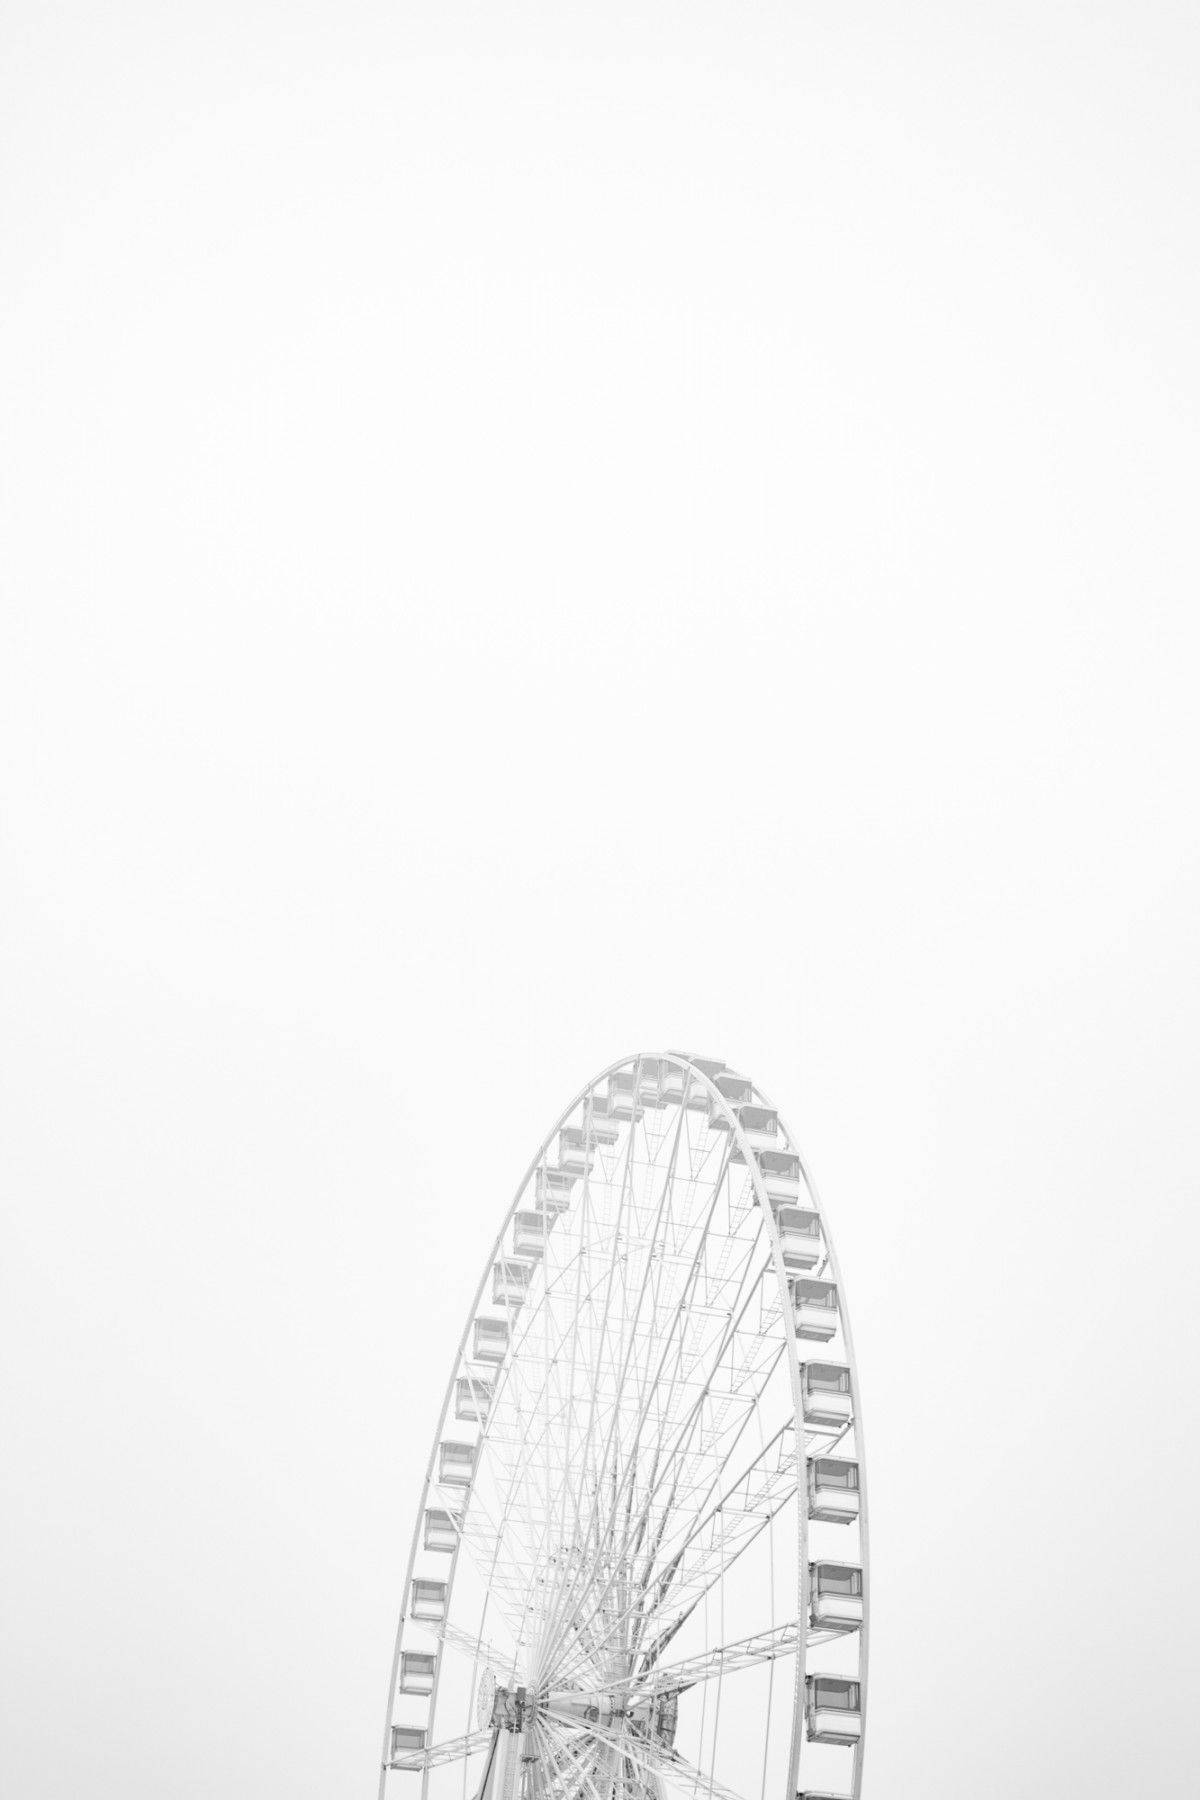 Gigantic Ferris Wheel In Cute White Aesthetic